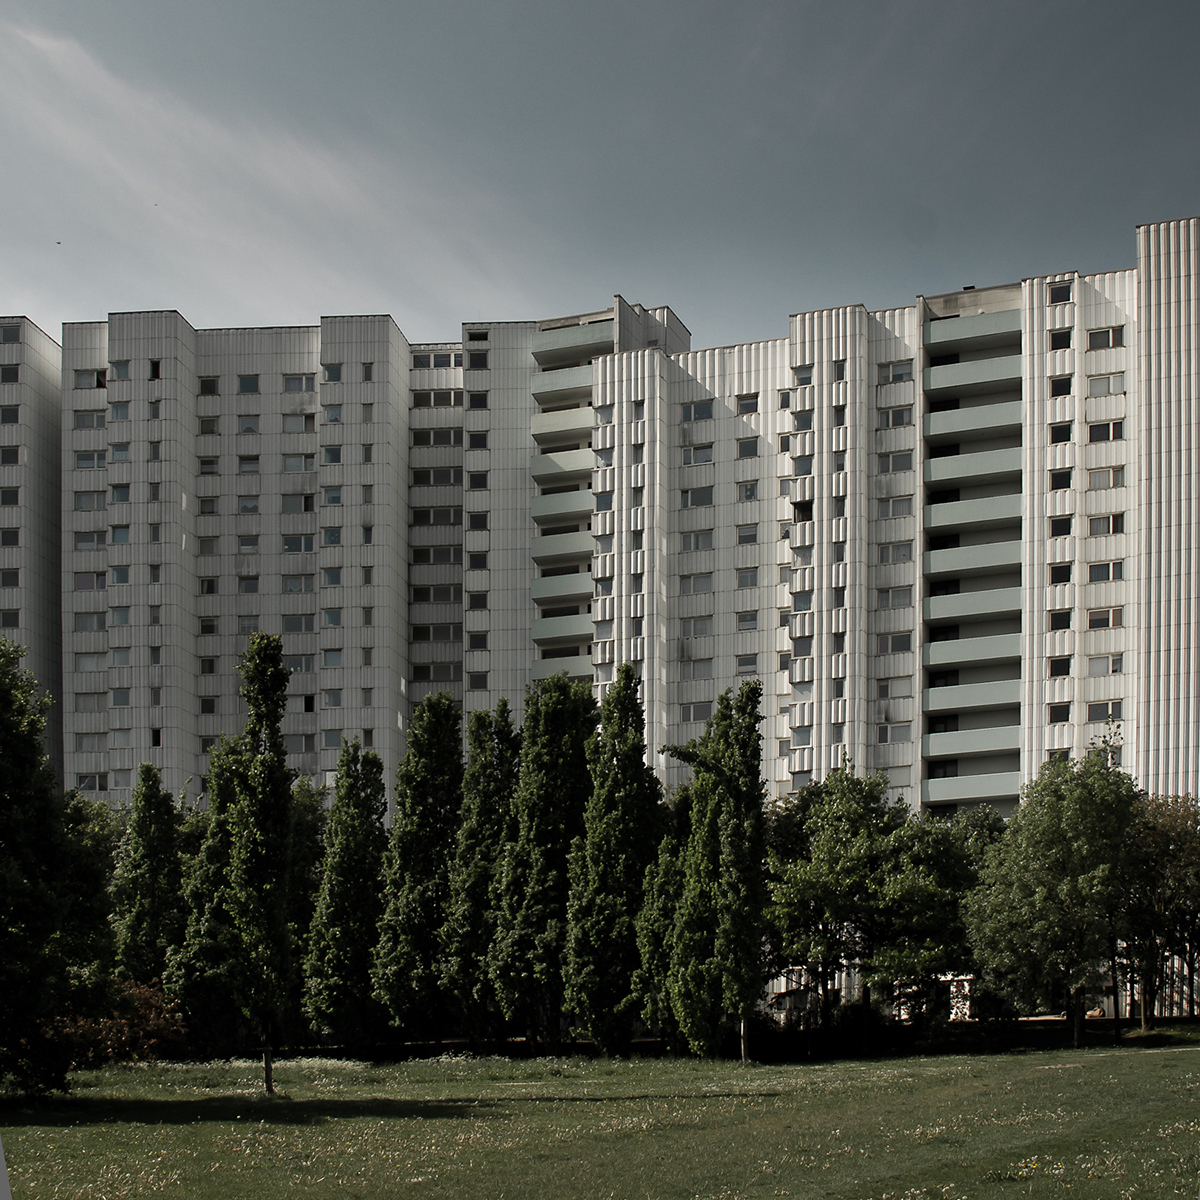 gropiusstadt planstadt planned city concrete Urban Tristesse beton berlin germany square digital Desaturated